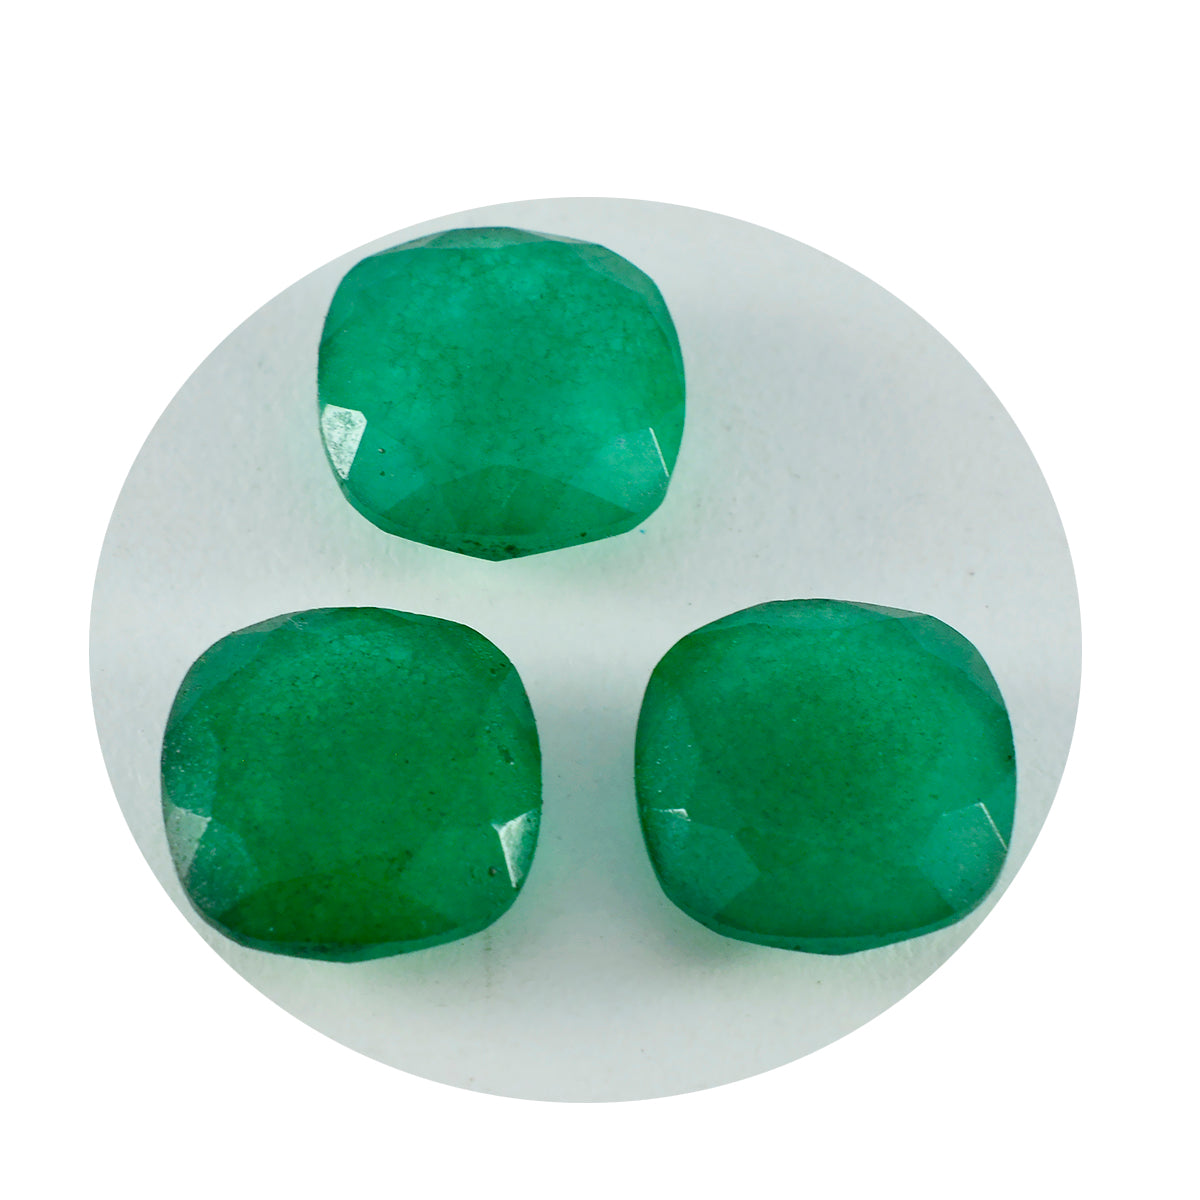 Riyogems 1PC echte groene jaspis gefacetteerd 9x9 mm kussenvorm mooie kwaliteitssteen